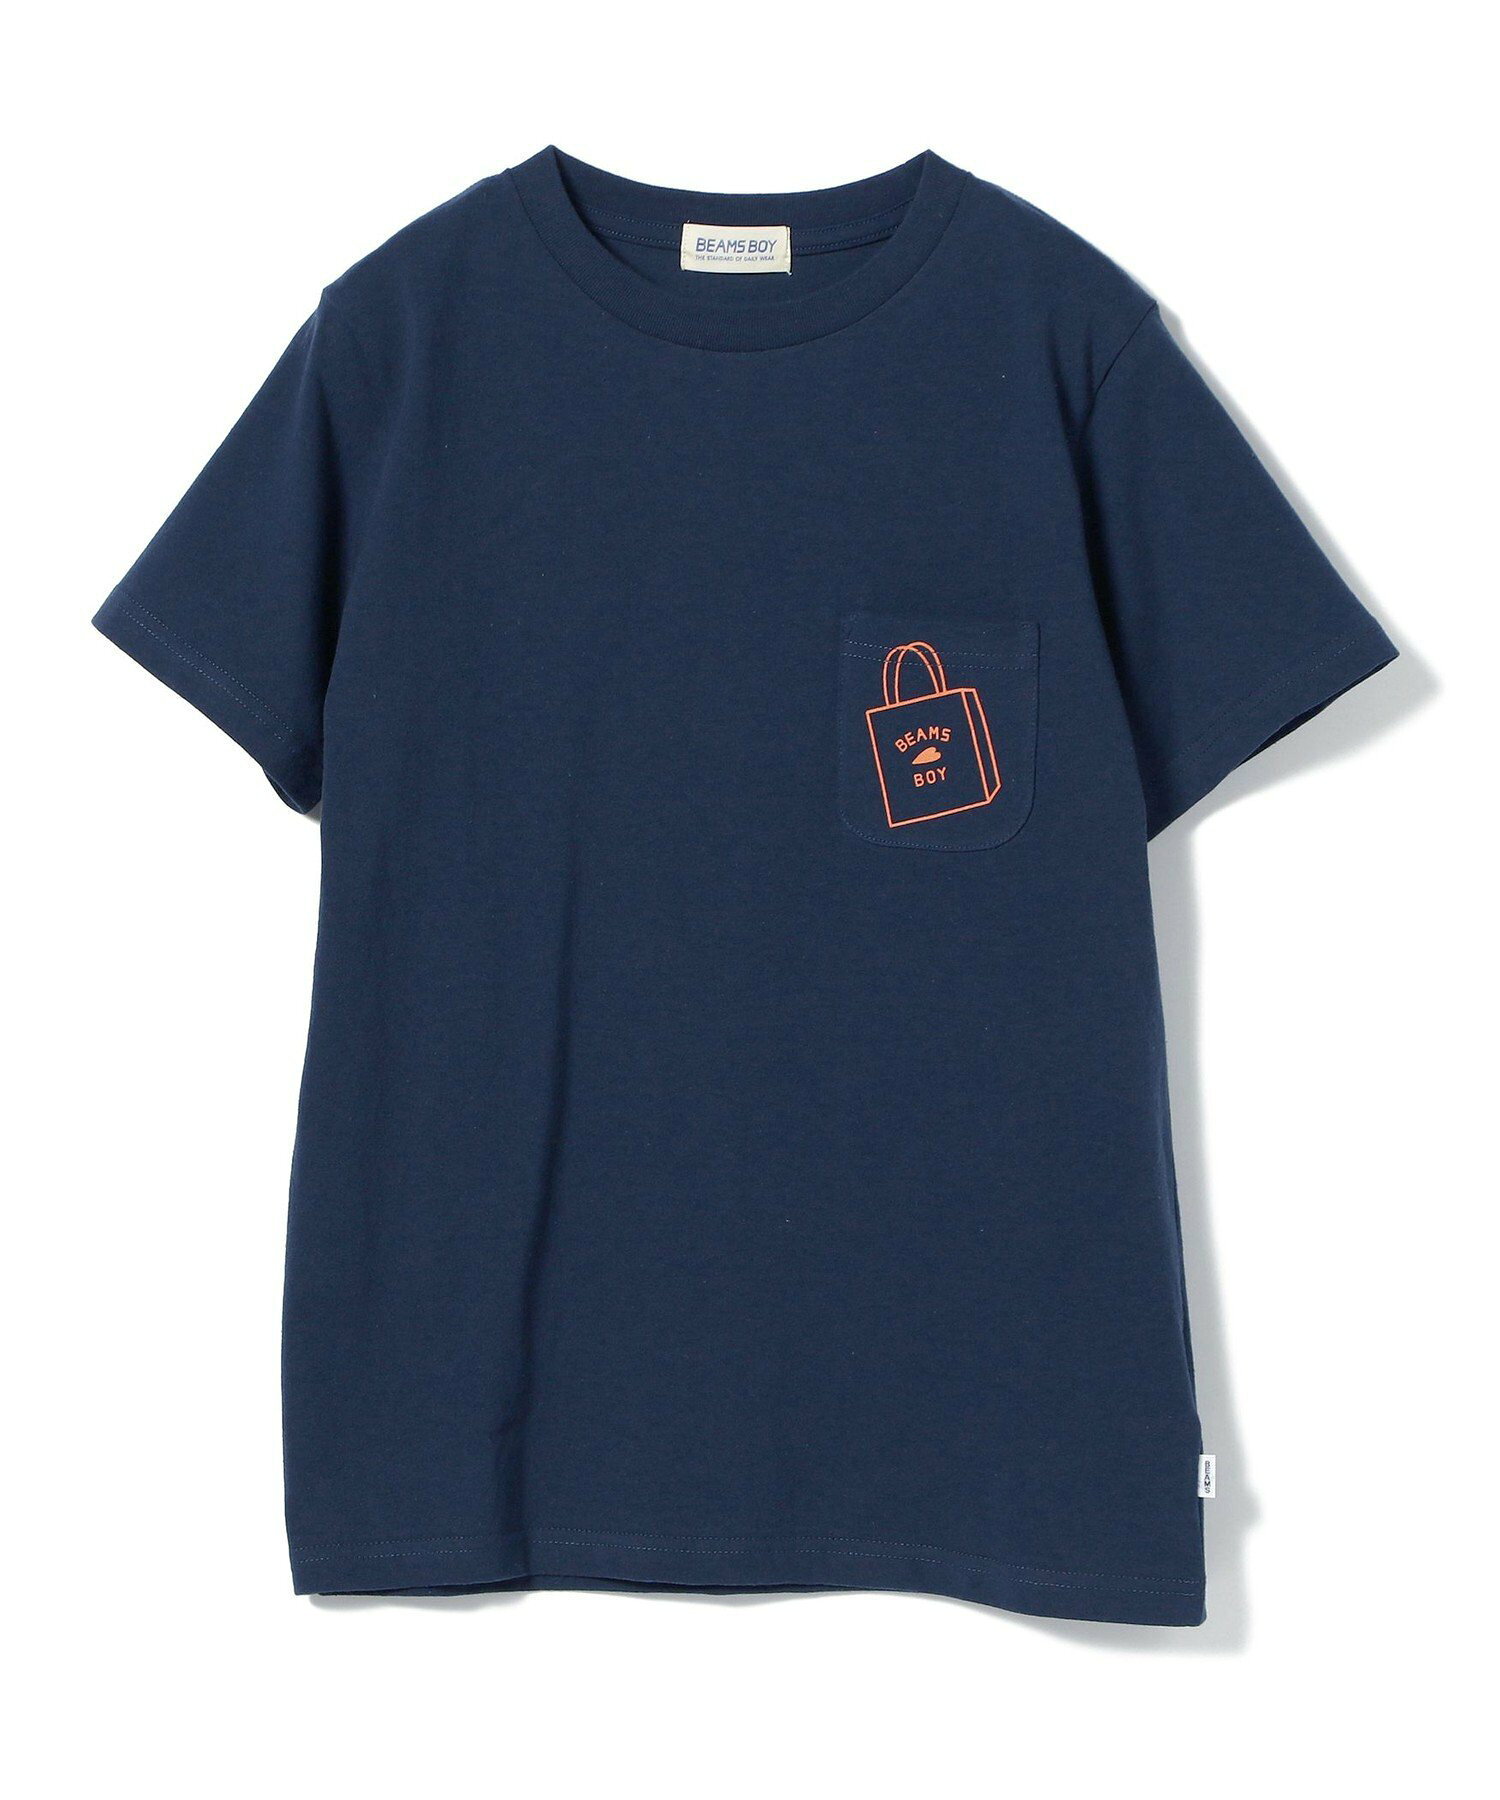 BEAMS BOY / ショップバッグロゴ ポケット Tシャツ